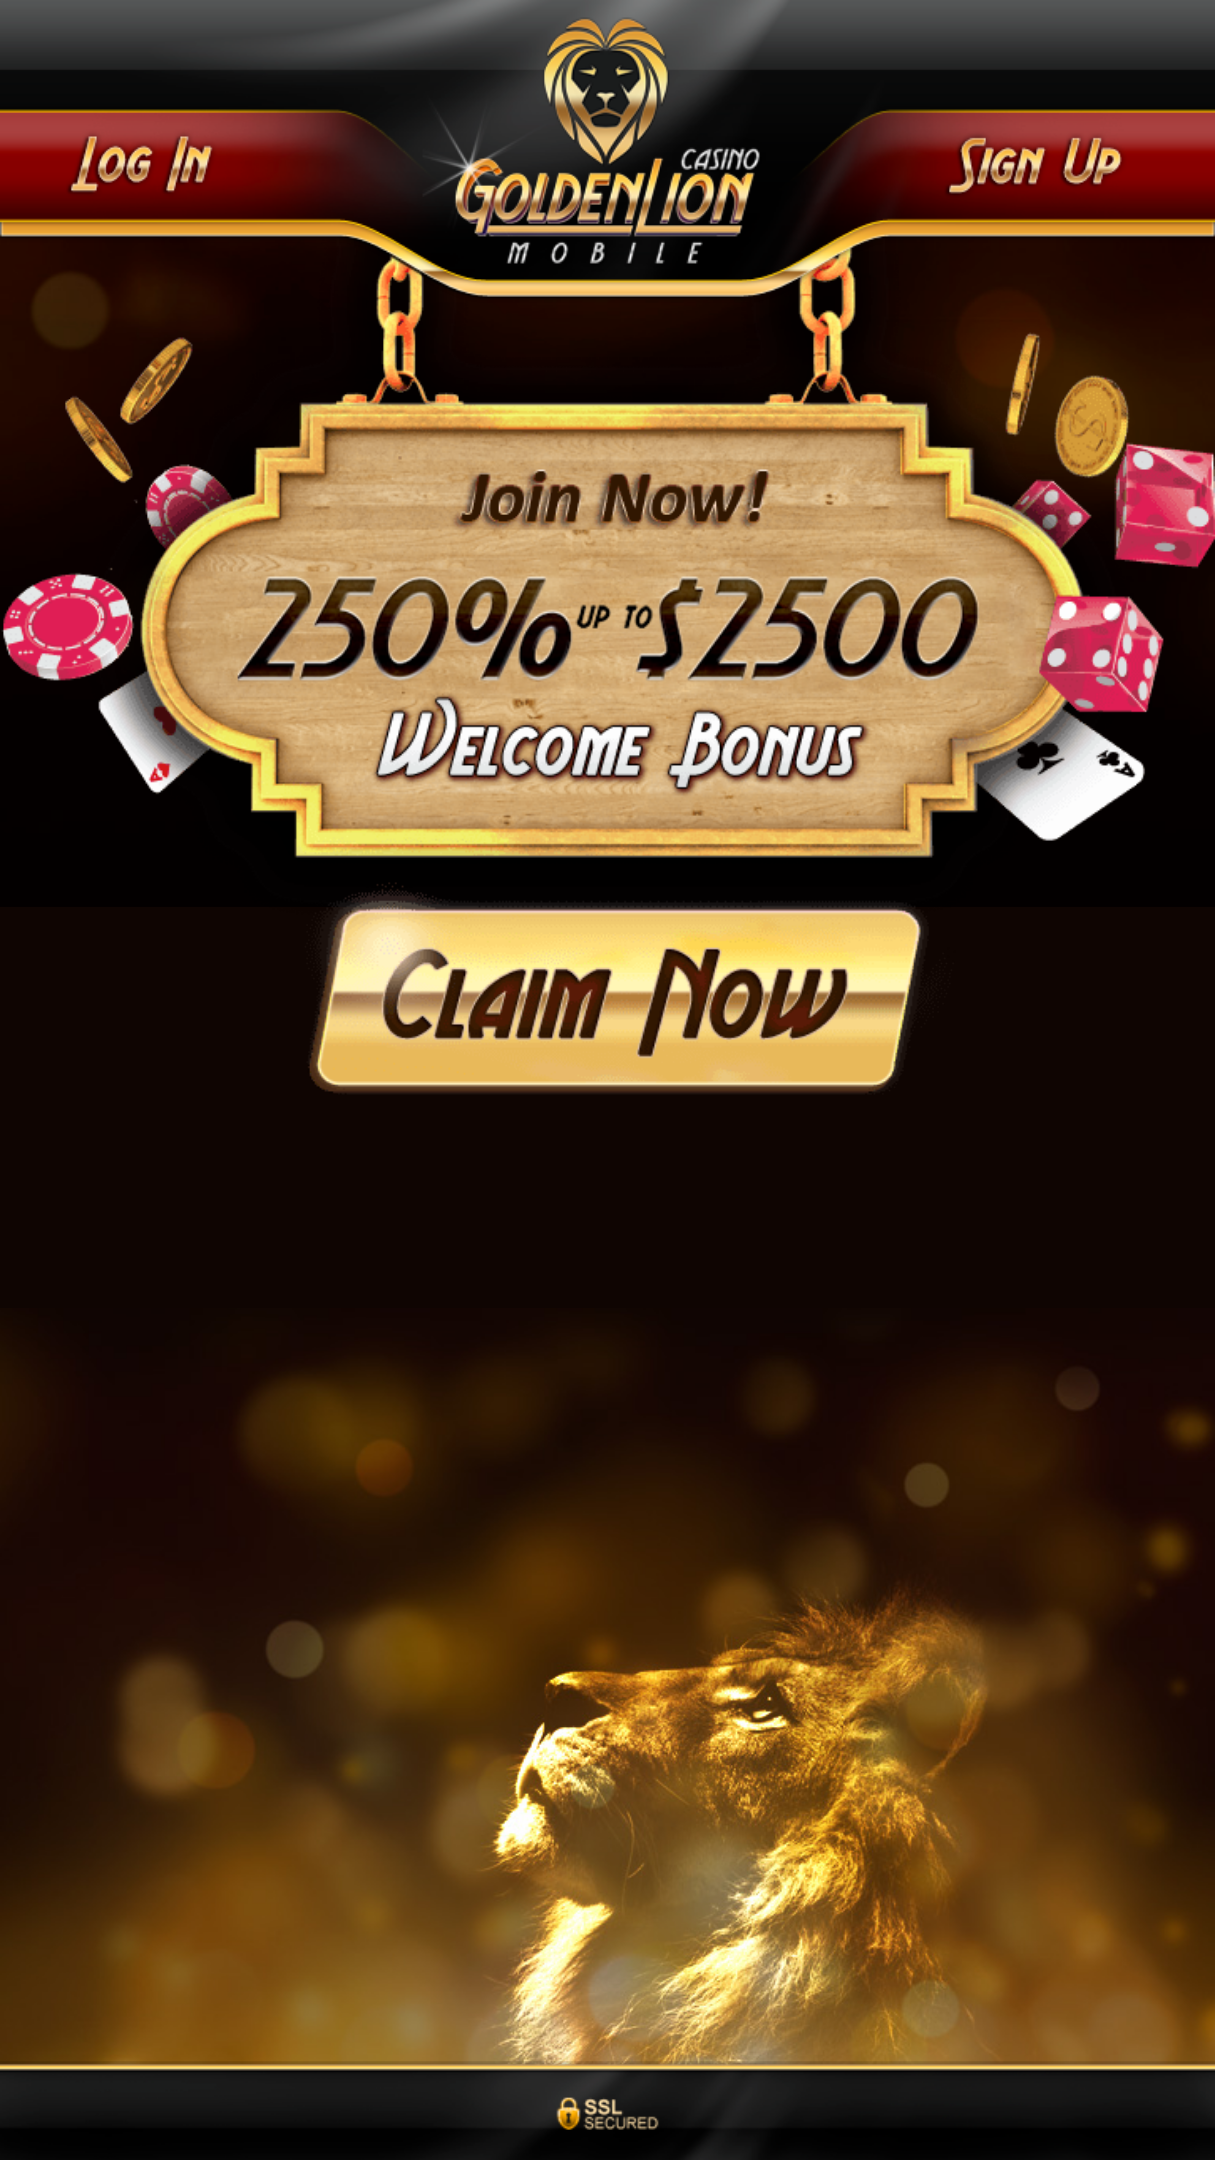 Golden lion casino app free